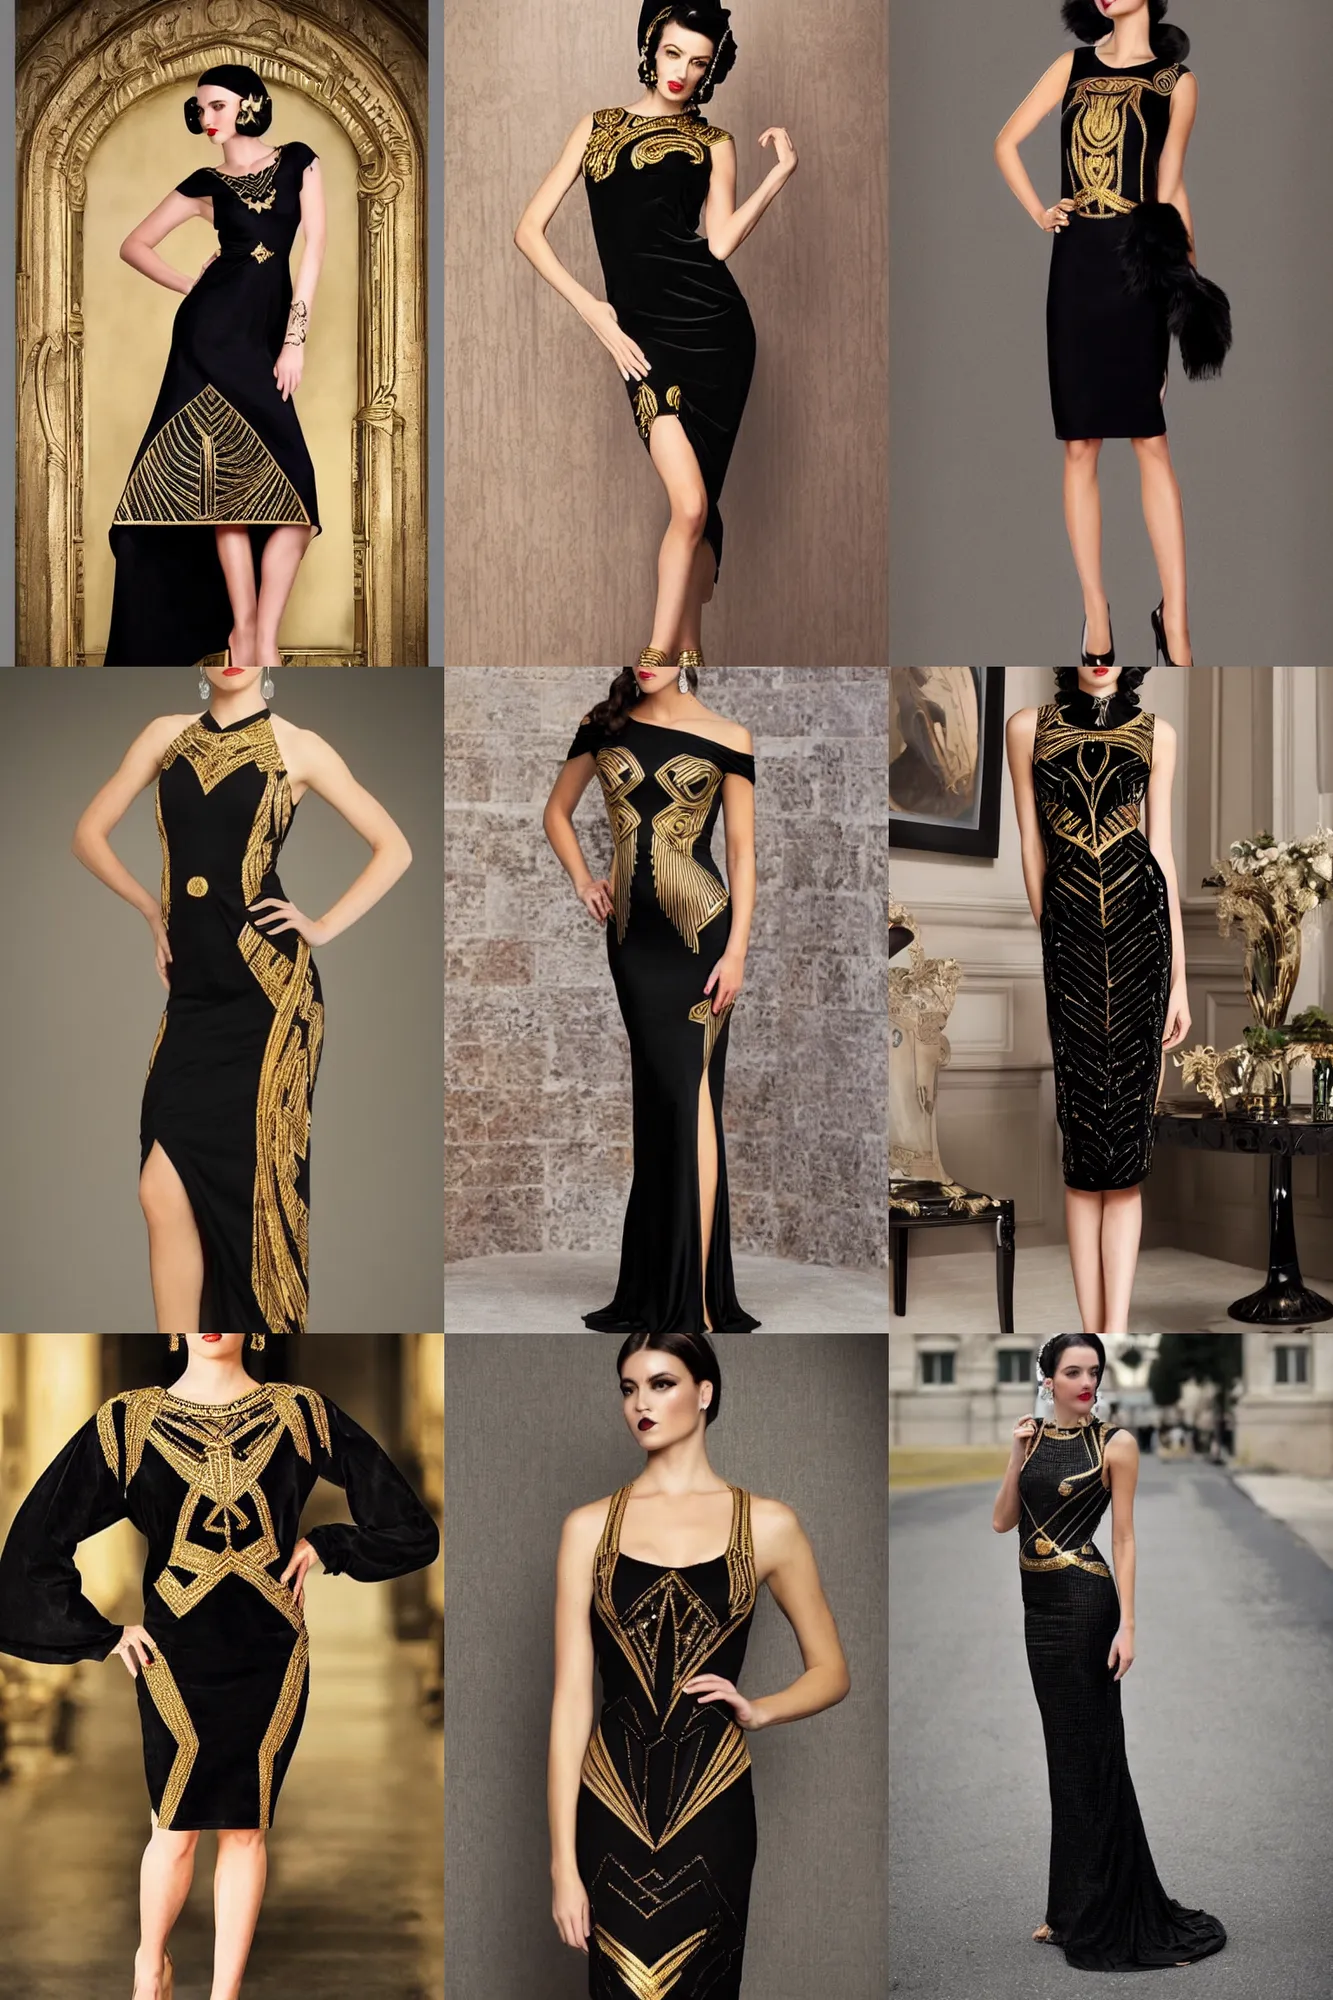 Prompt: beautiful black dress with golden art deco design elements, high fashion